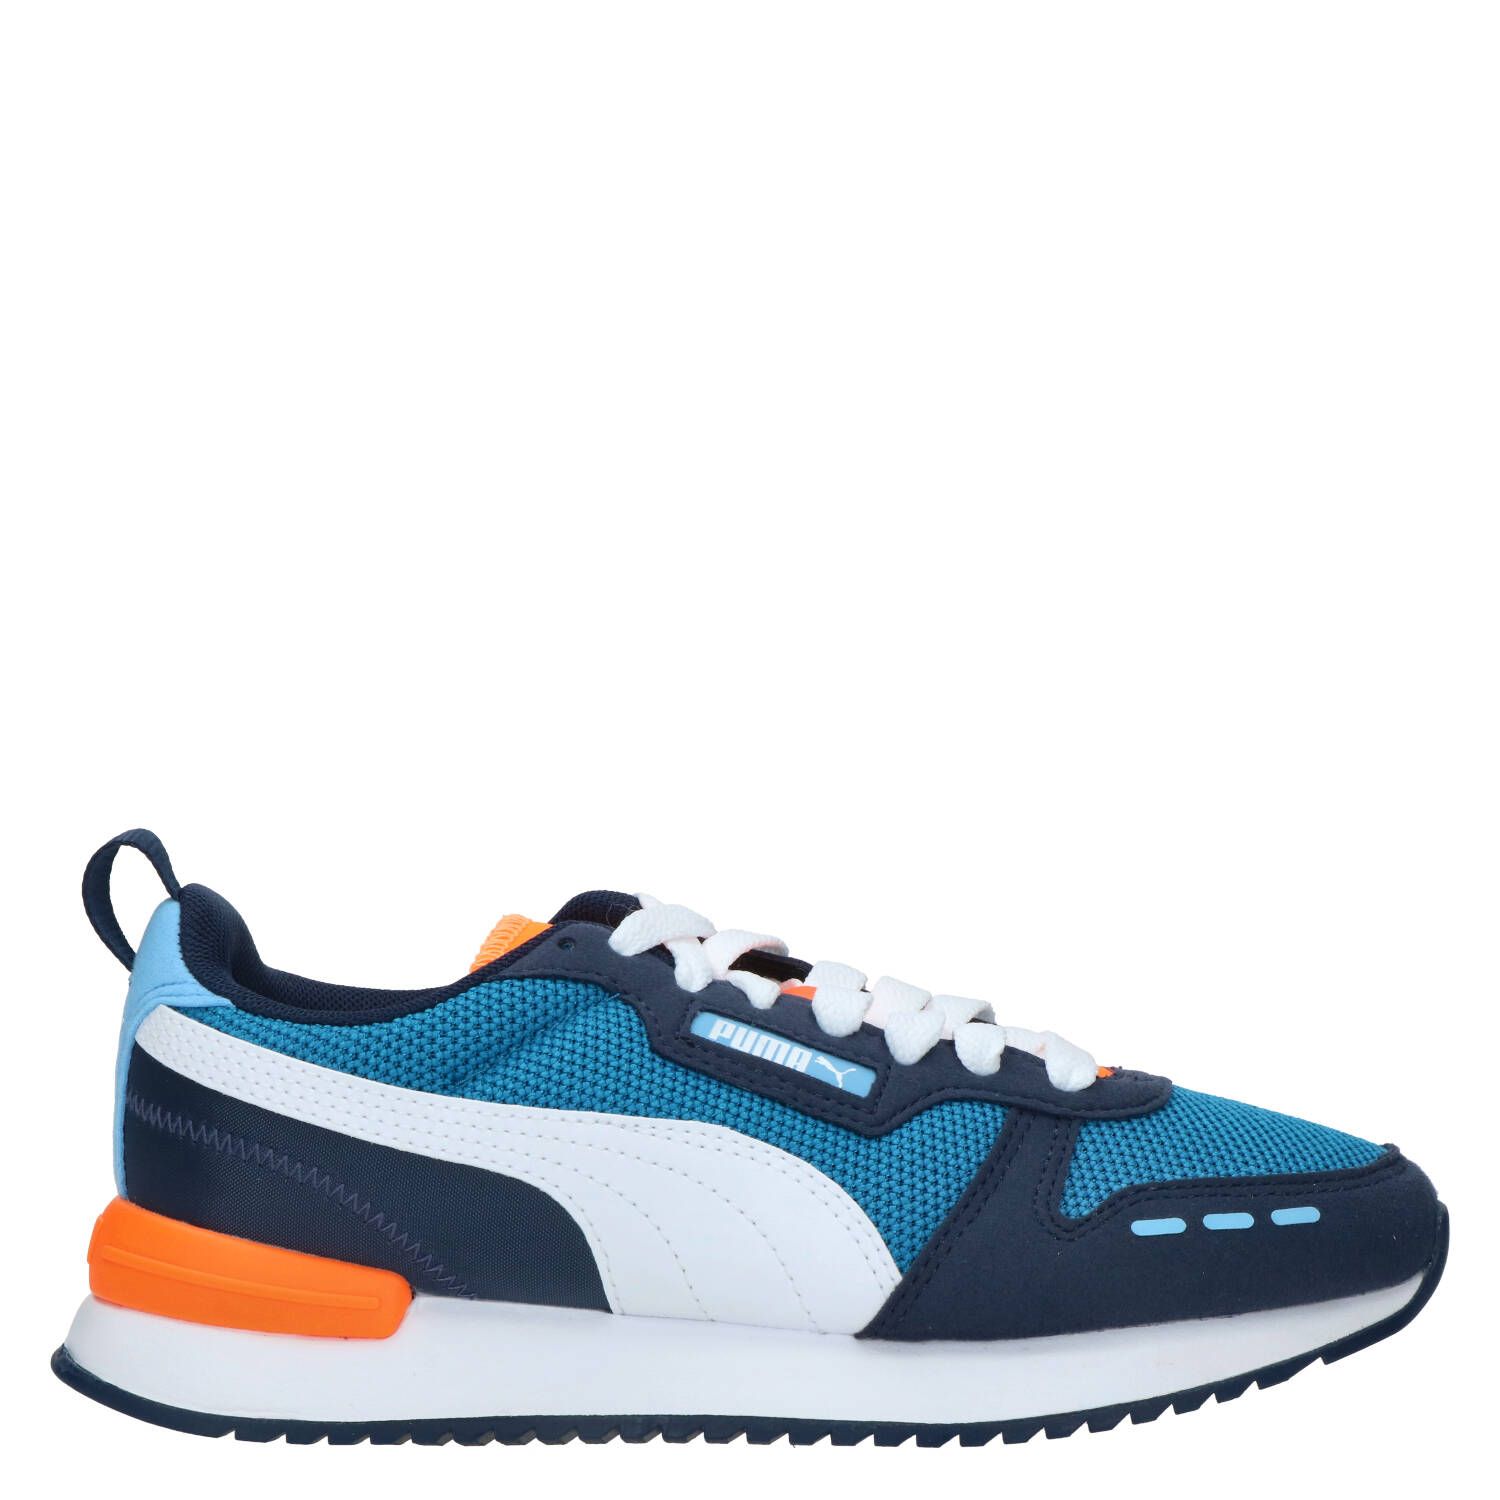 PUMA 373616 R78 JR sneaker, Sneakers, Jongen, Maat 37, blauw/multi